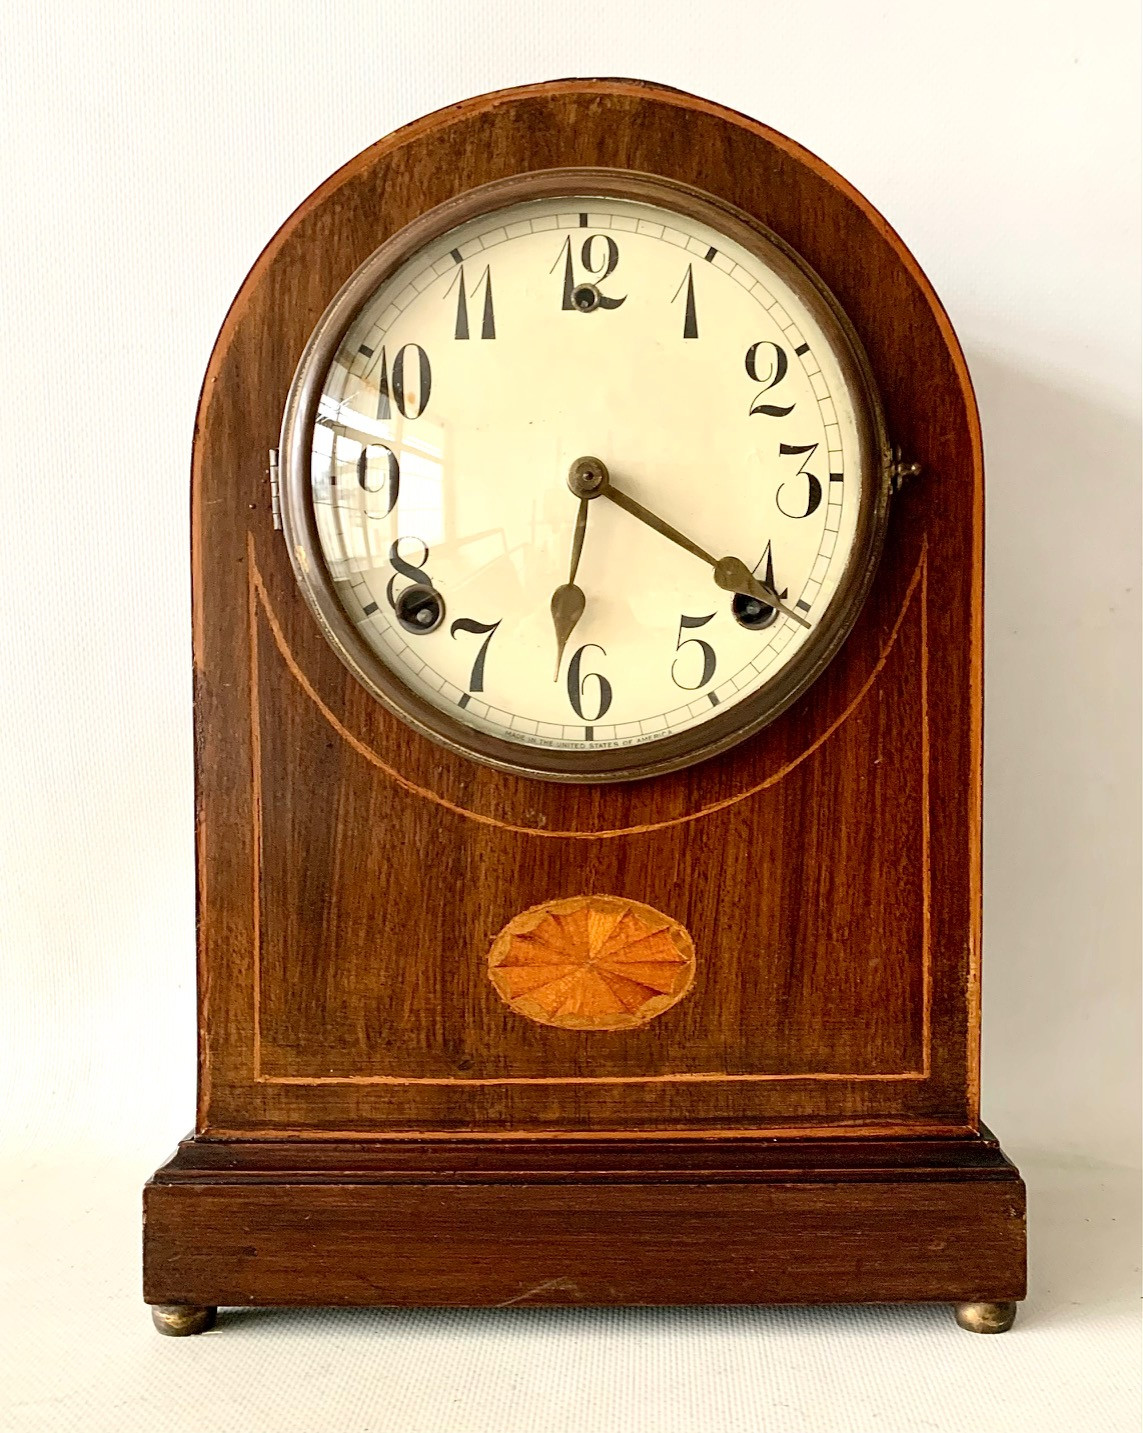 https://www.antiguart.com/5466/reloj-de-mesa-siglo-xix-gilbert-clock-co-winsted-conn-usa.jpg